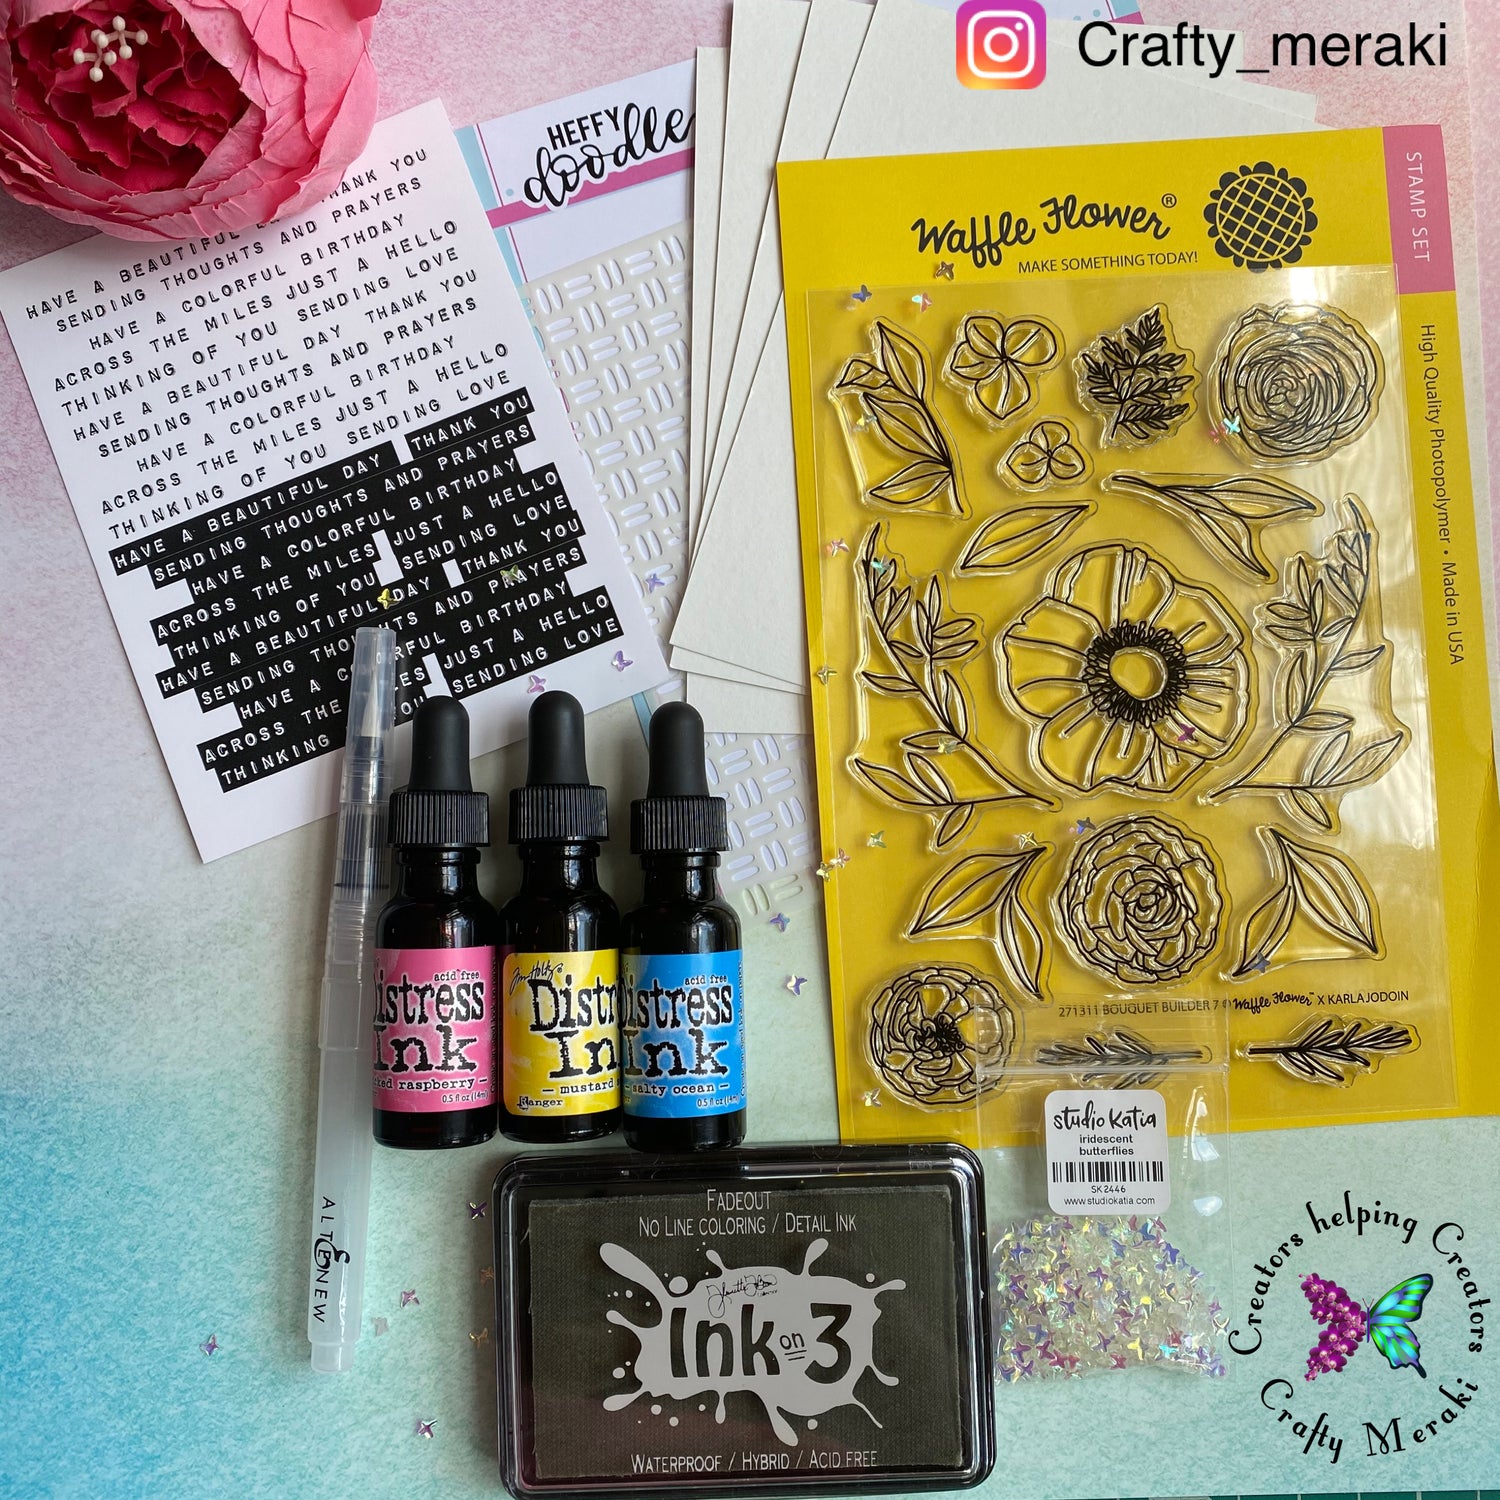 Introducing the Crafty Meraki Special Edition Watercolor Kit!